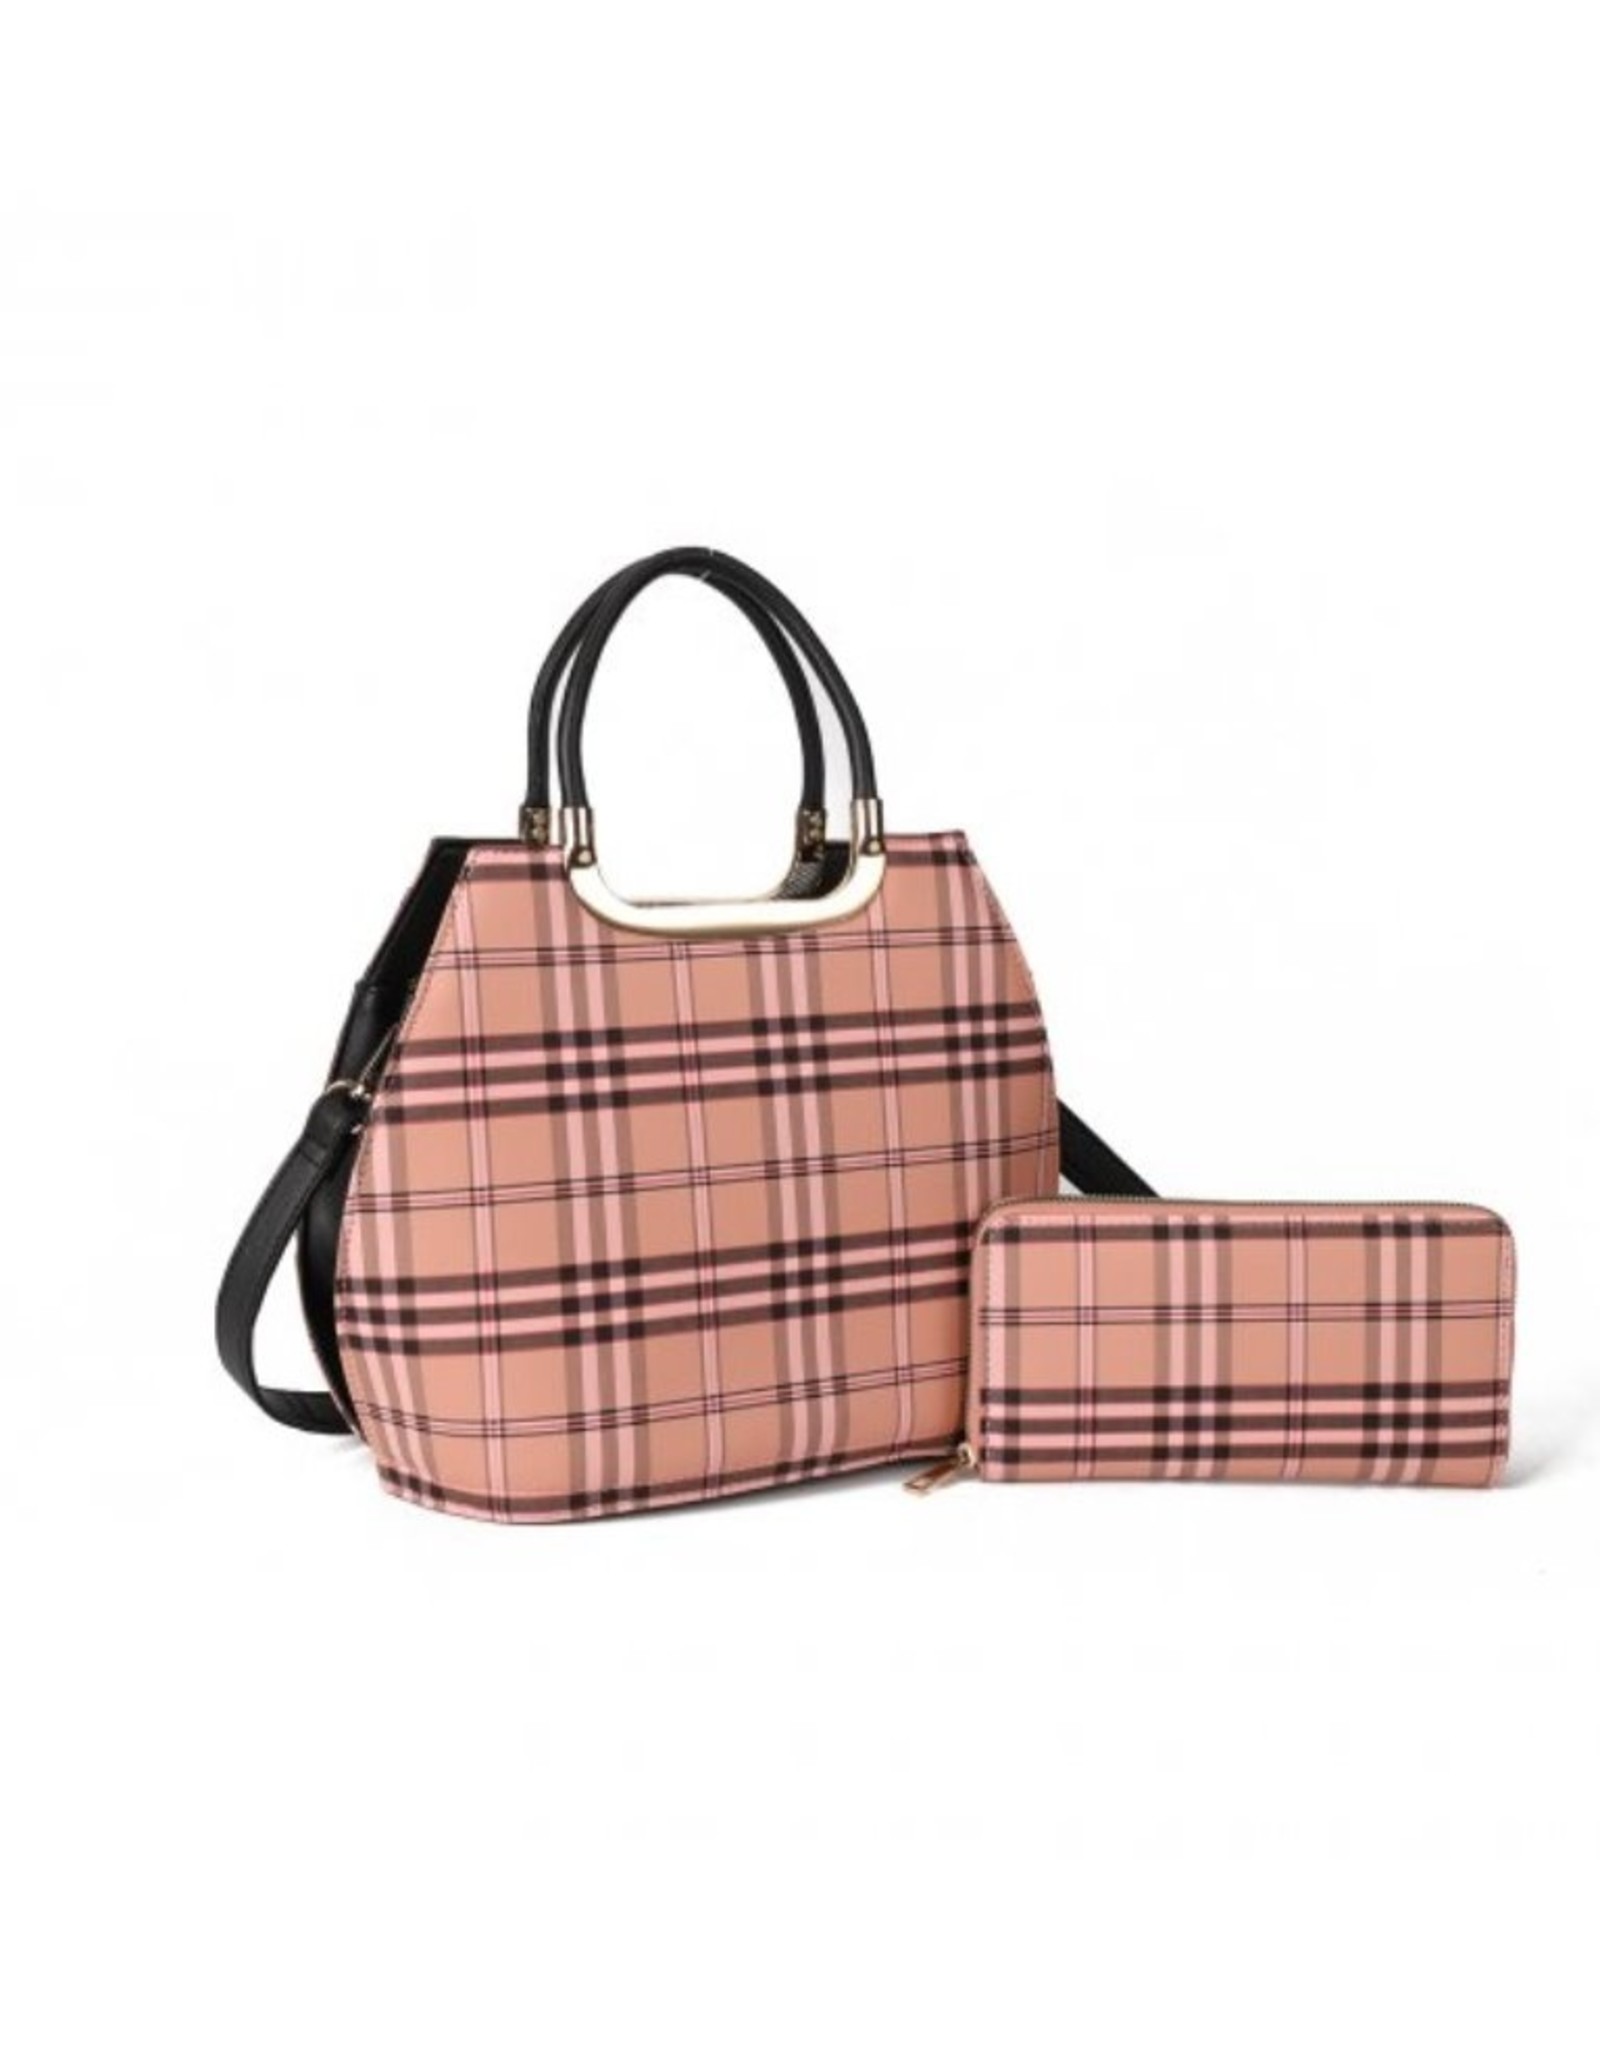 Trukado Fashion bags - Modious Handbag with Free Purse Checkered pattern